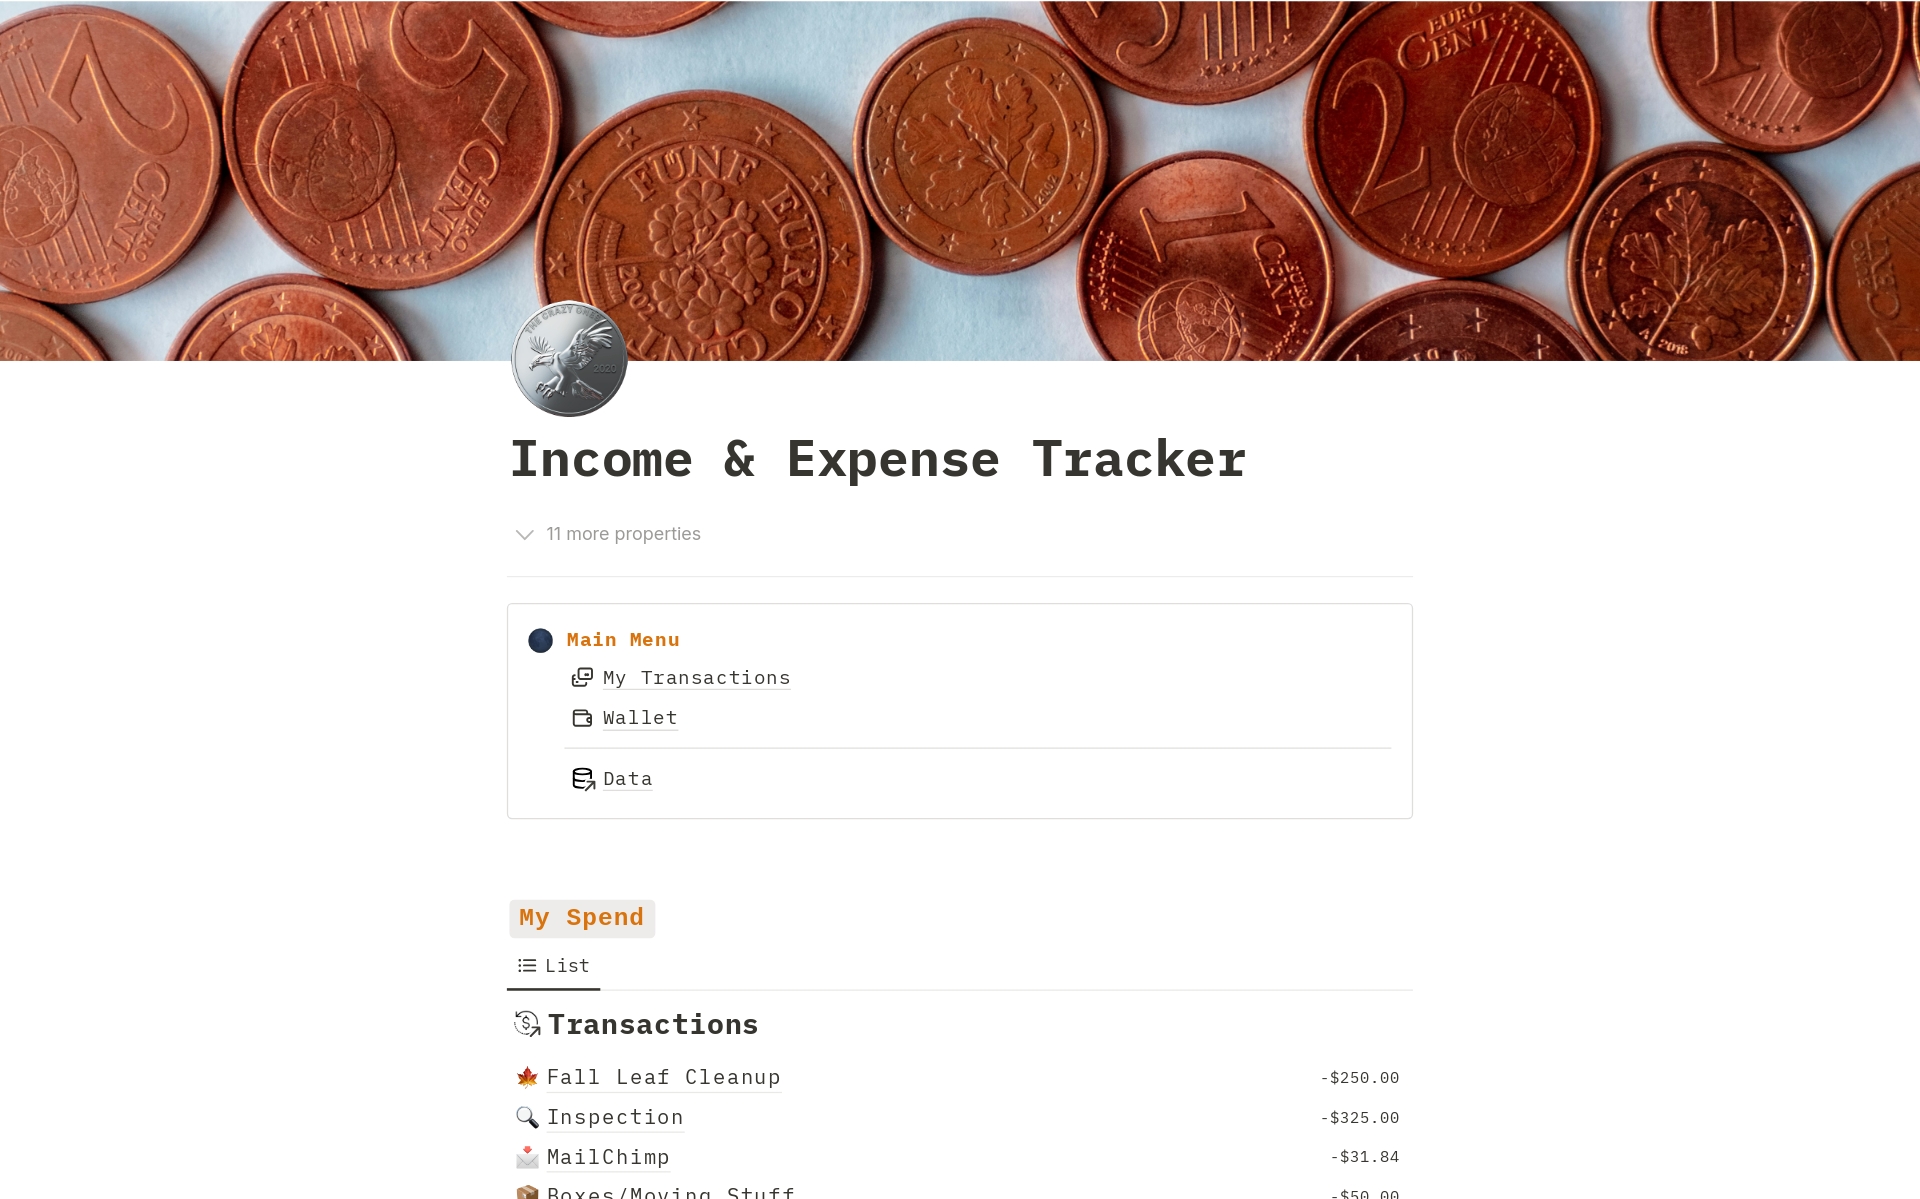 Vista previa de plantilla para Income & Expense Tracker